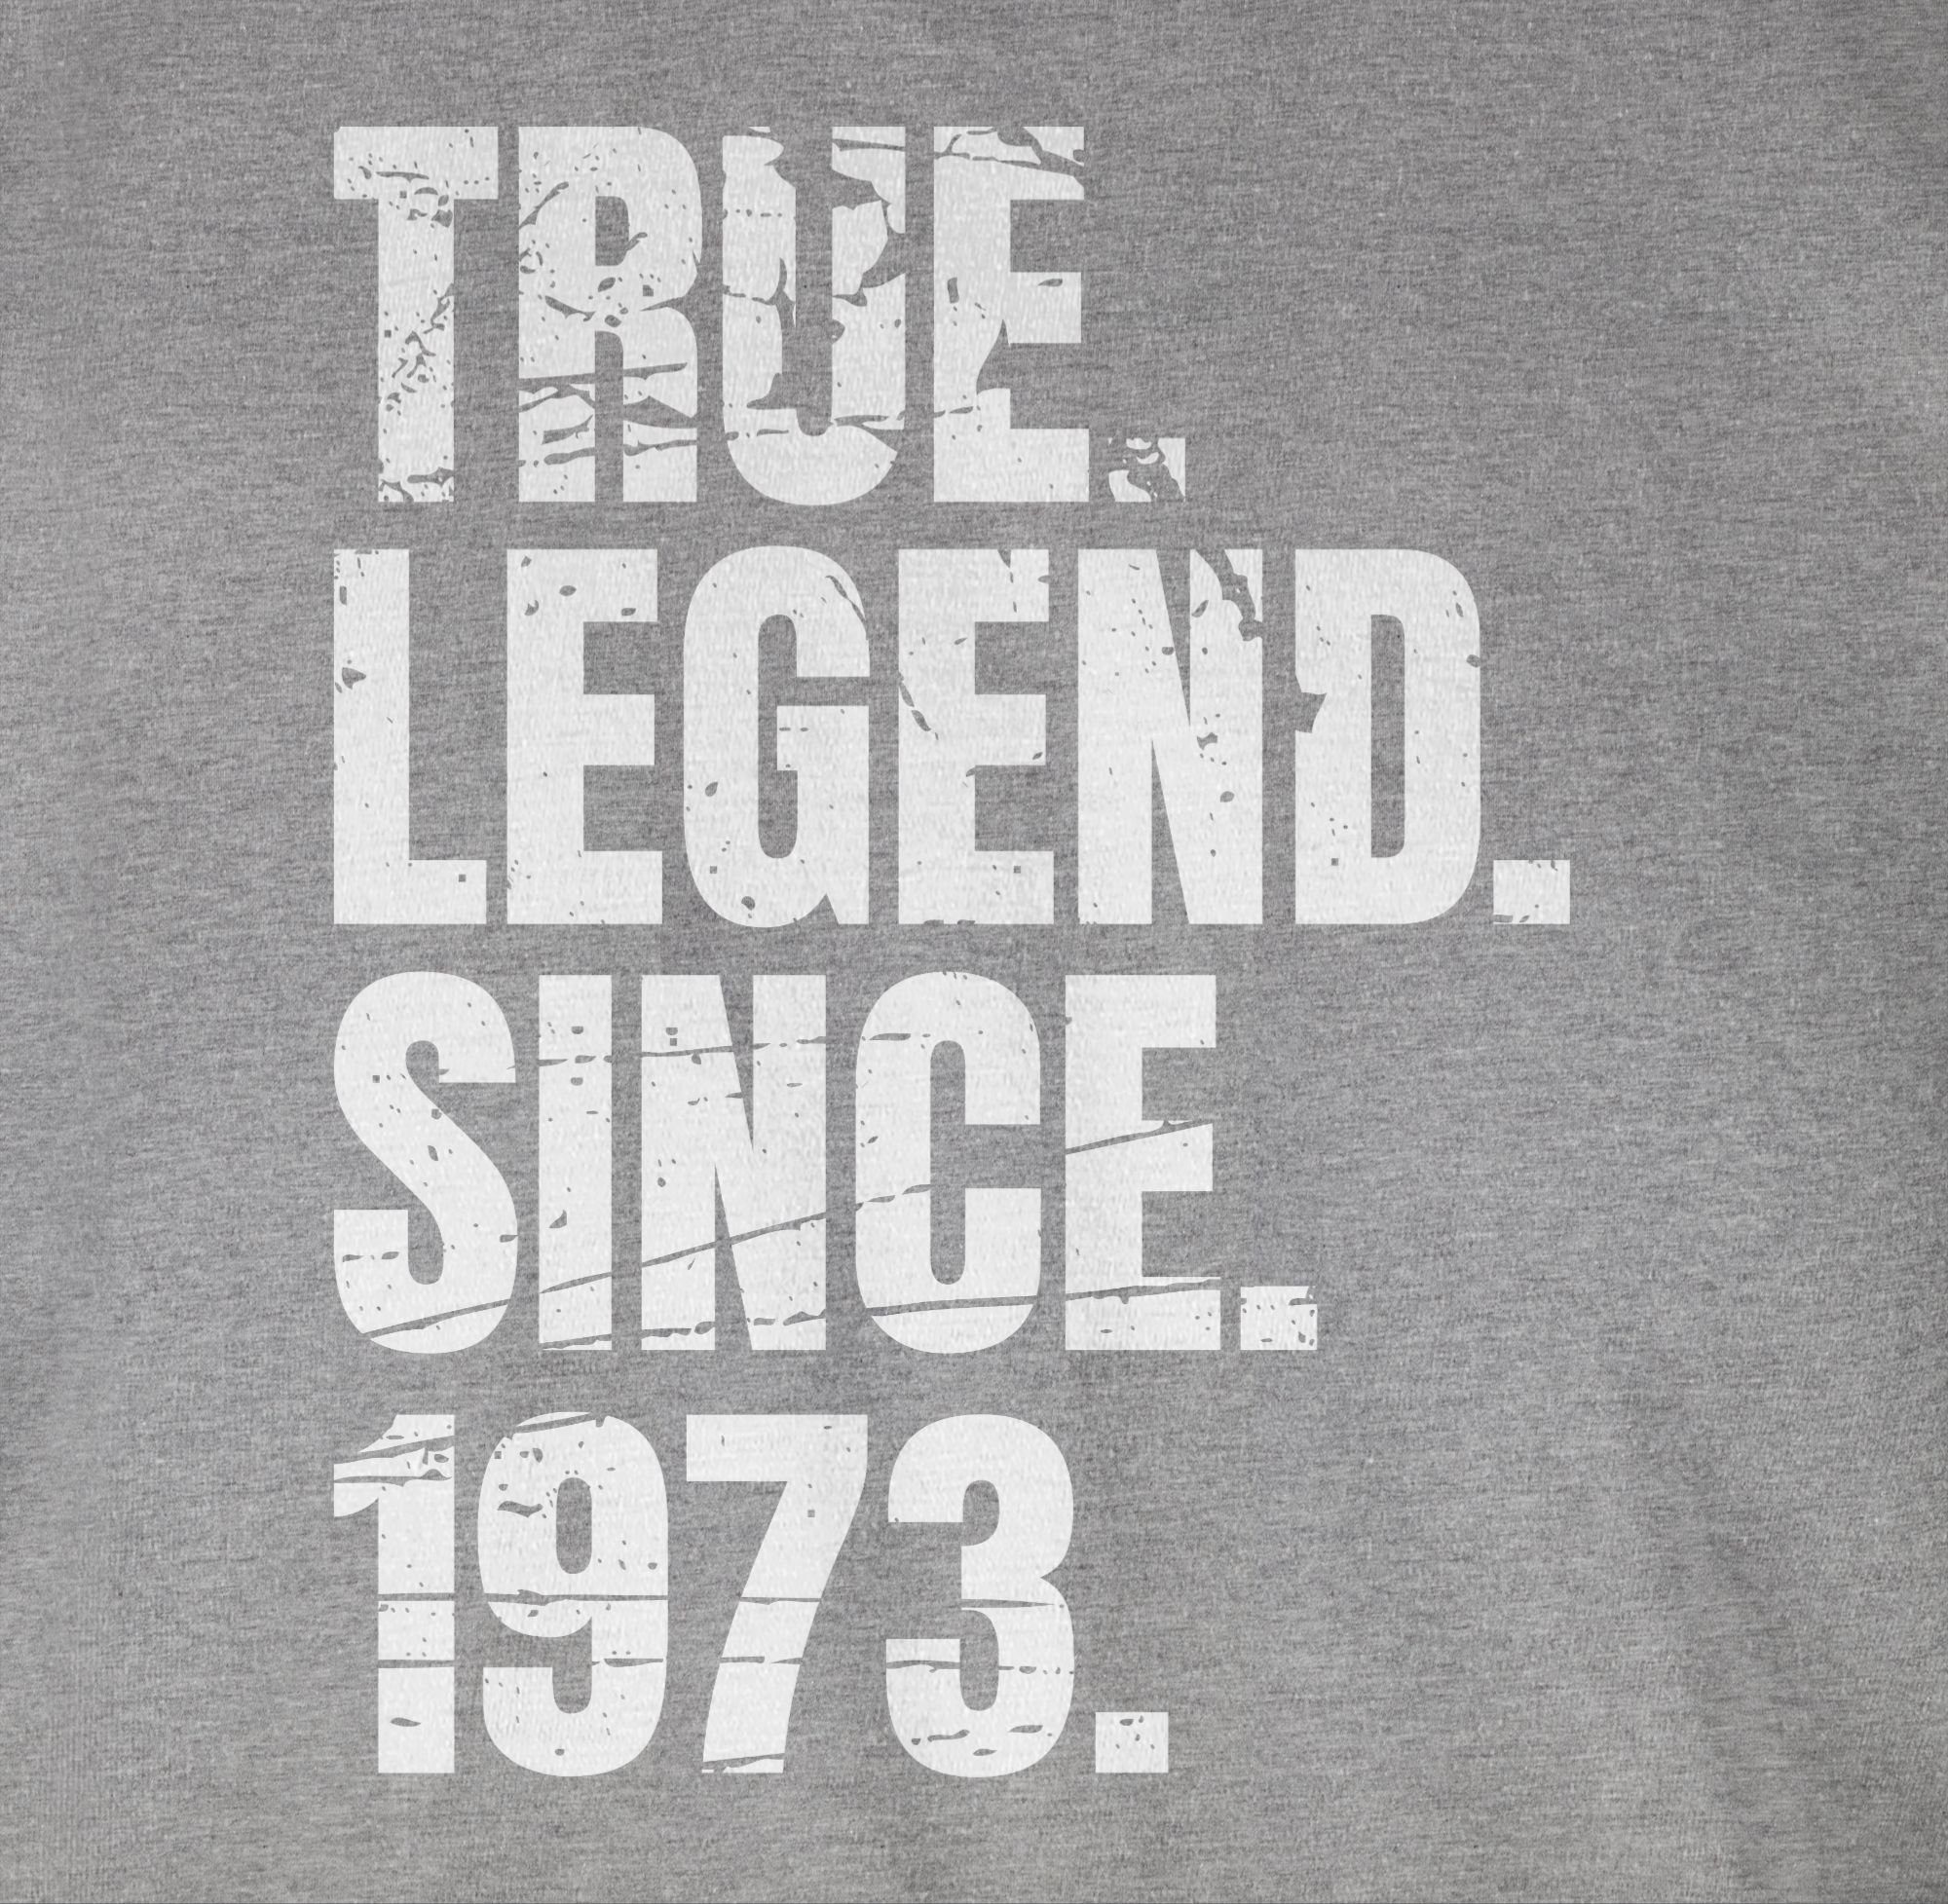 since Shirtracer 50. True Vintage Geburtstag 1973 Legend meliert Grau 02 T-Shirt